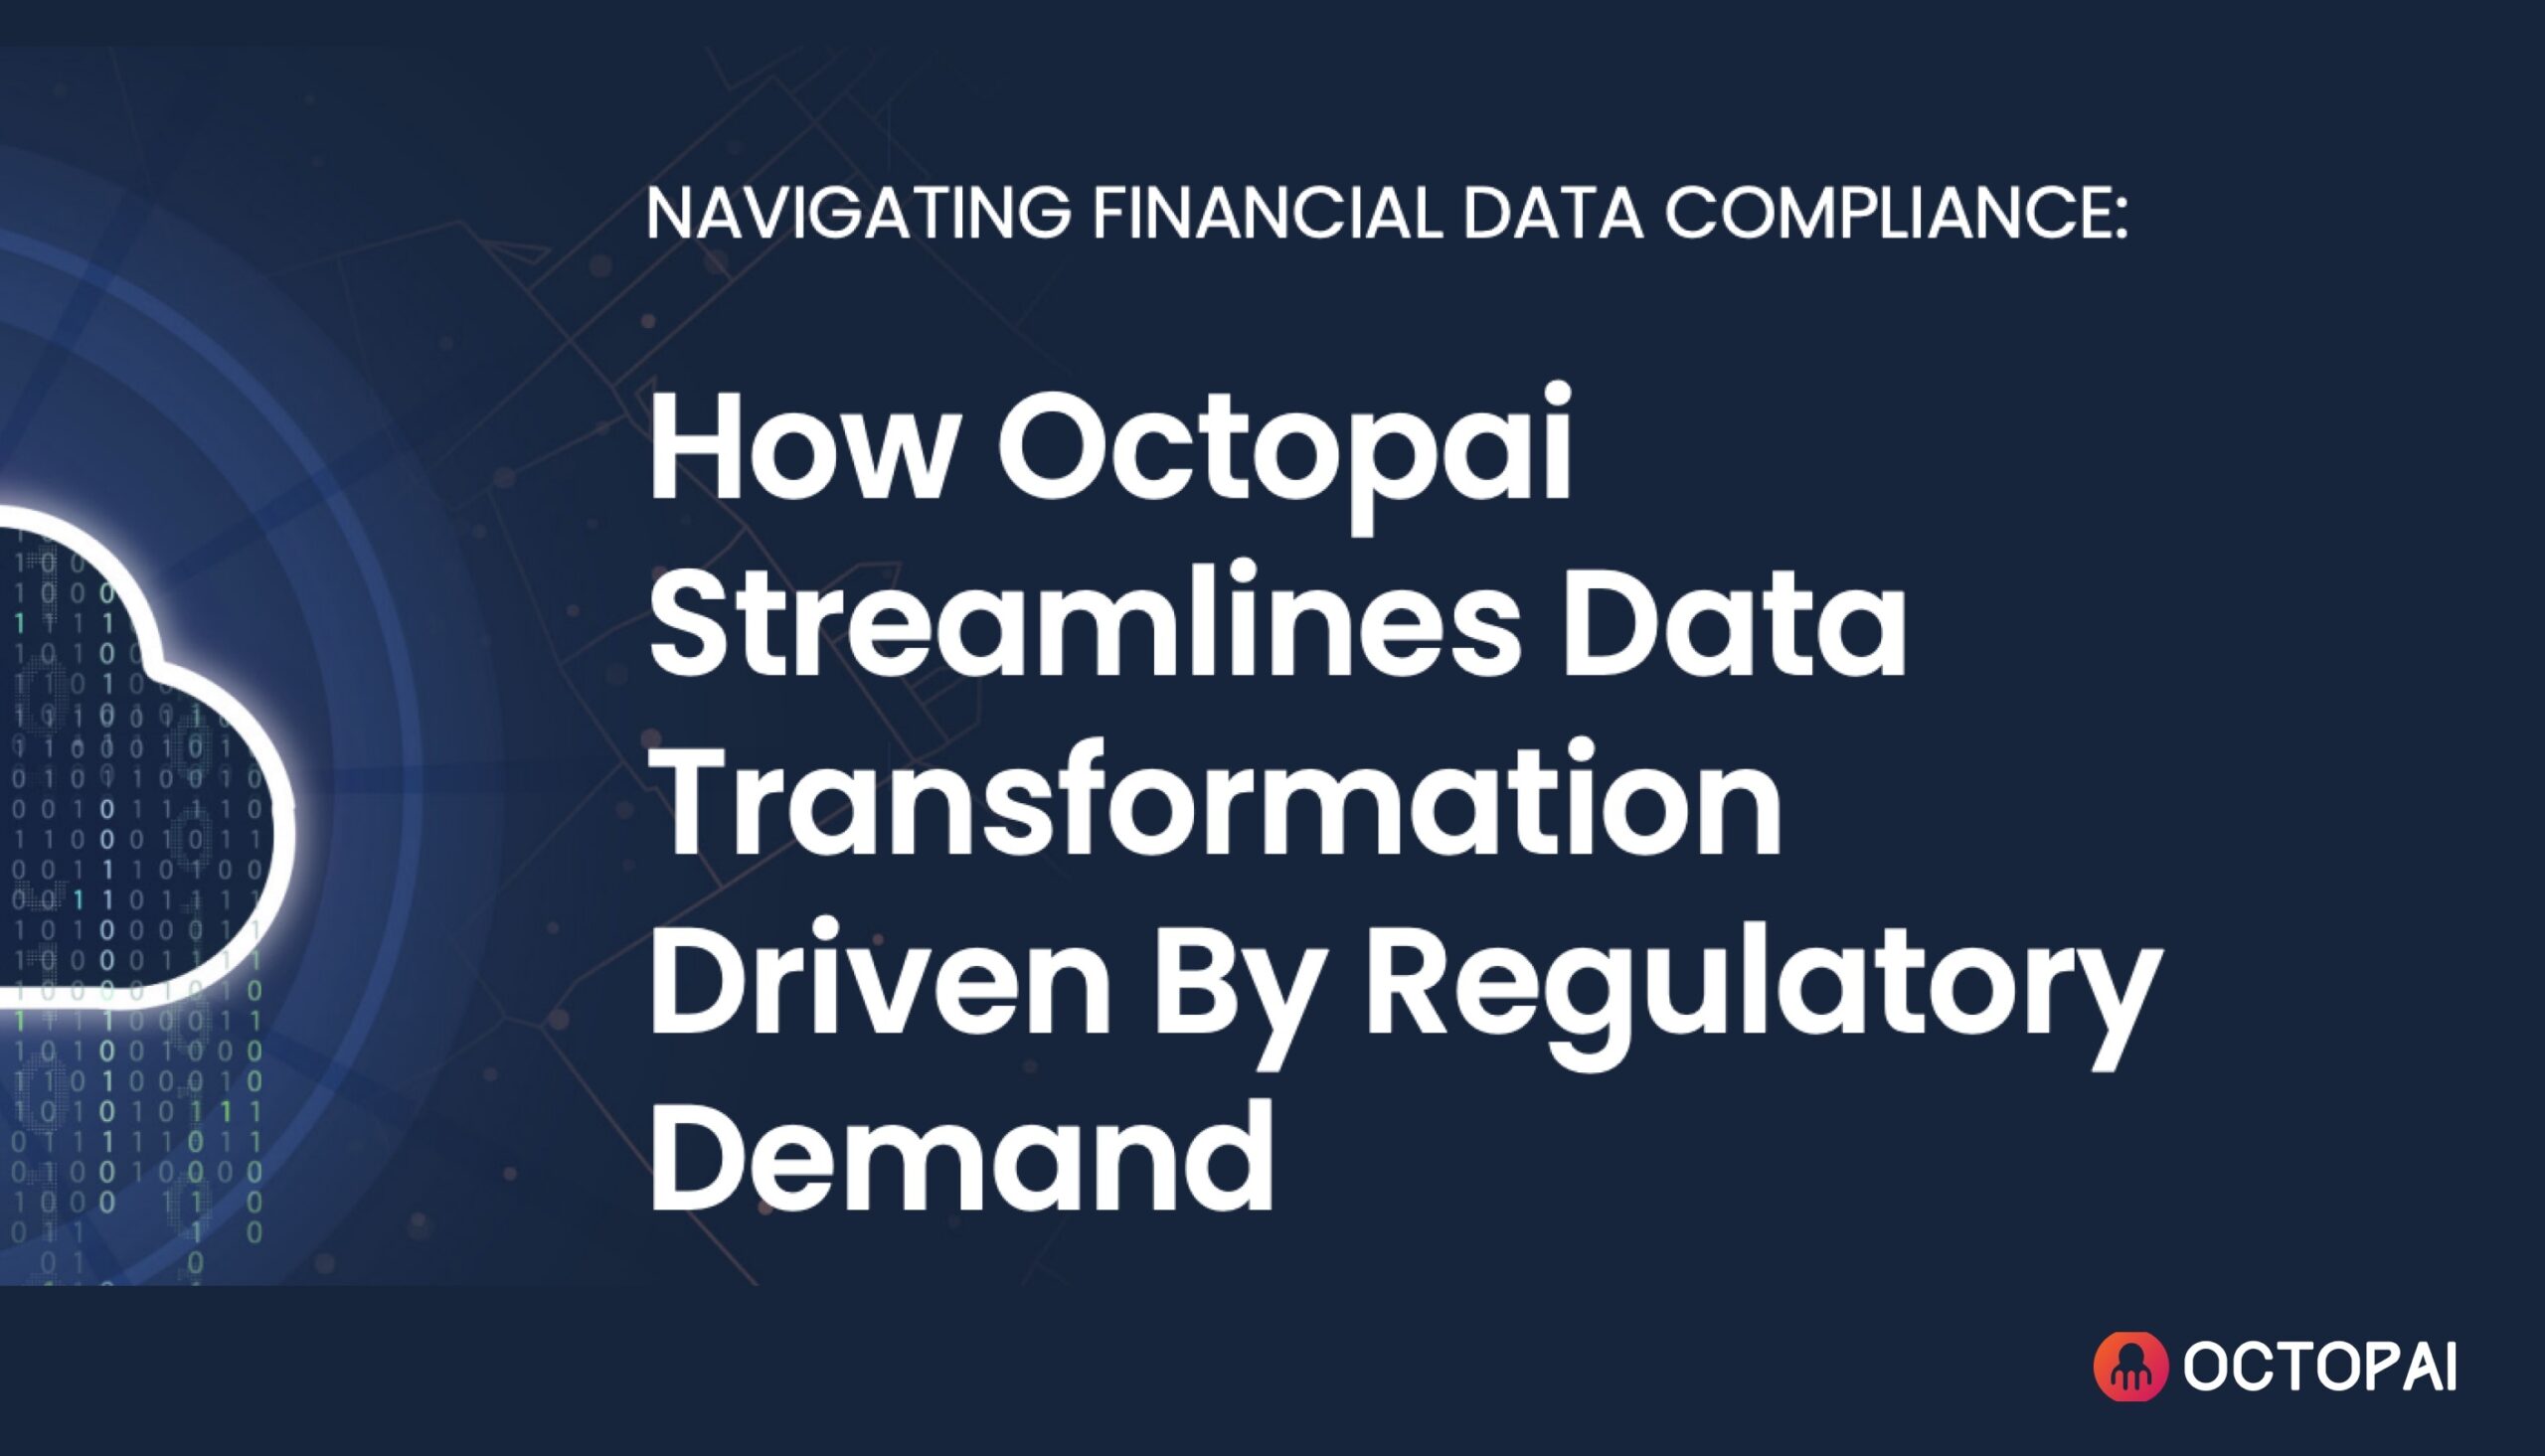 Navigating & Streamlining Financial Data Compliance